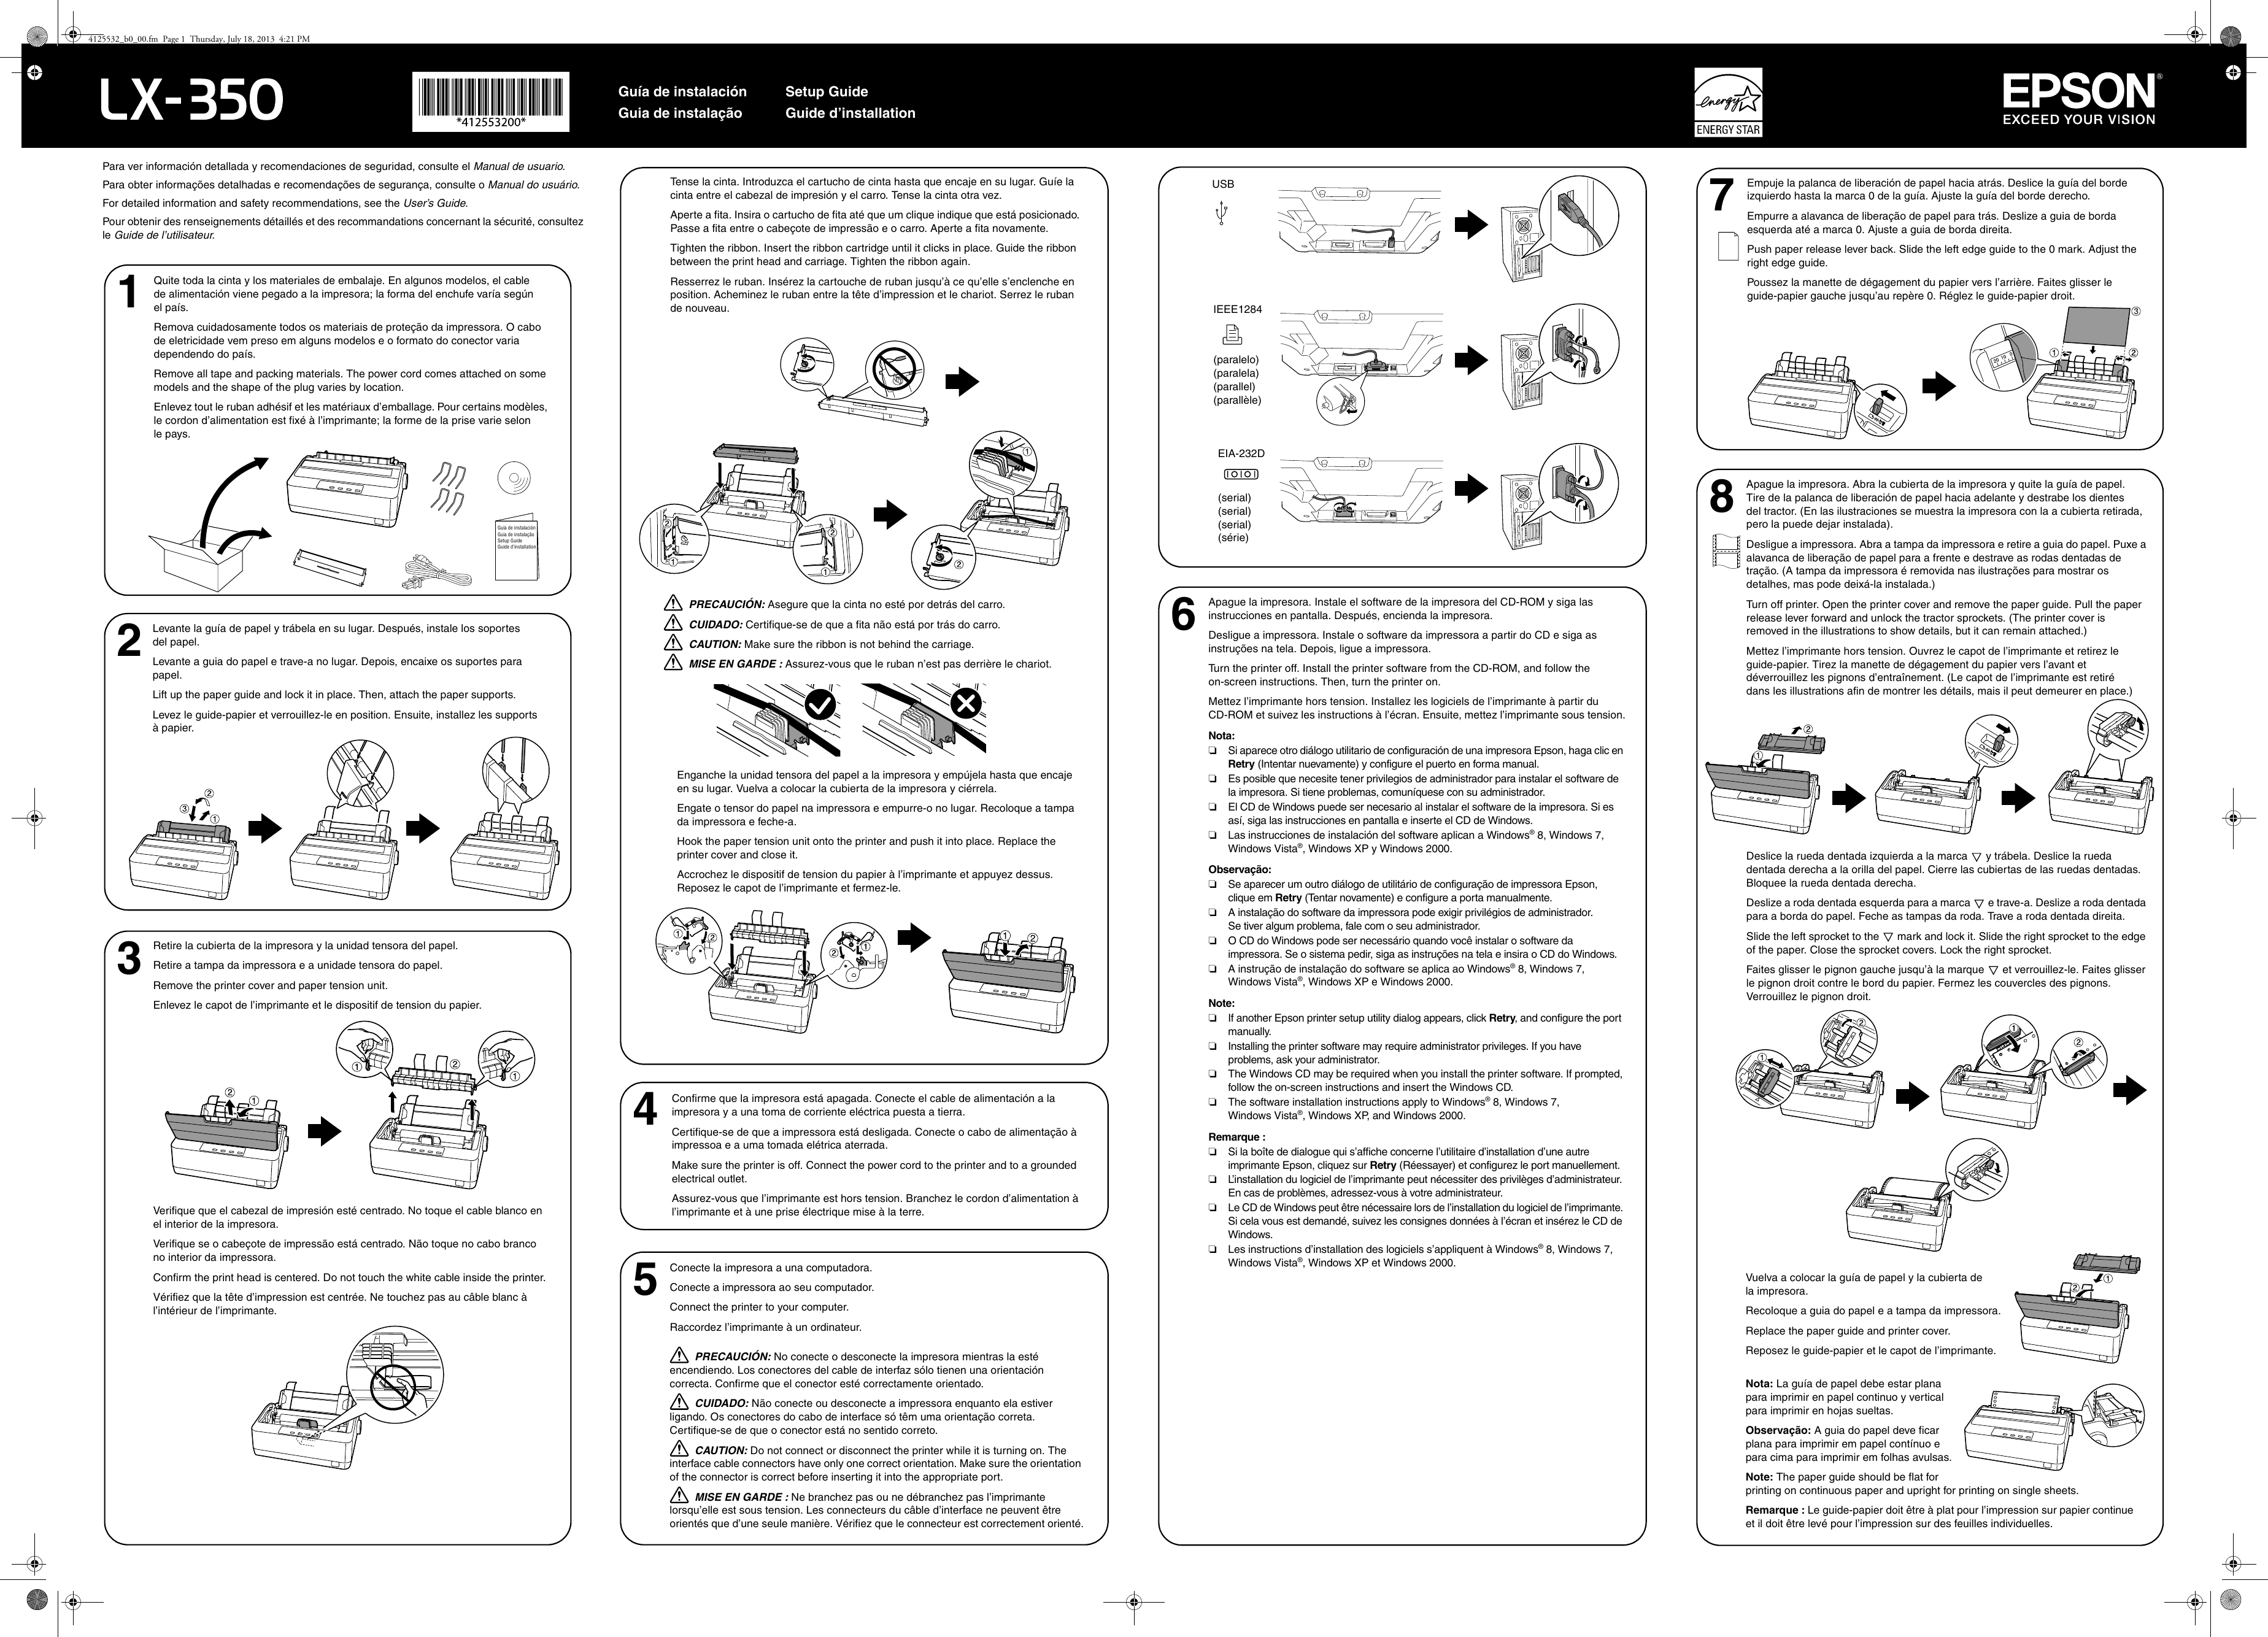 Page 1 of 4 - Epson Epson-Lx-350-Impact-Printer-Setup-Guide- Setup Guide - LX-350  Epson-lx-350-impact-printer-setup-guide